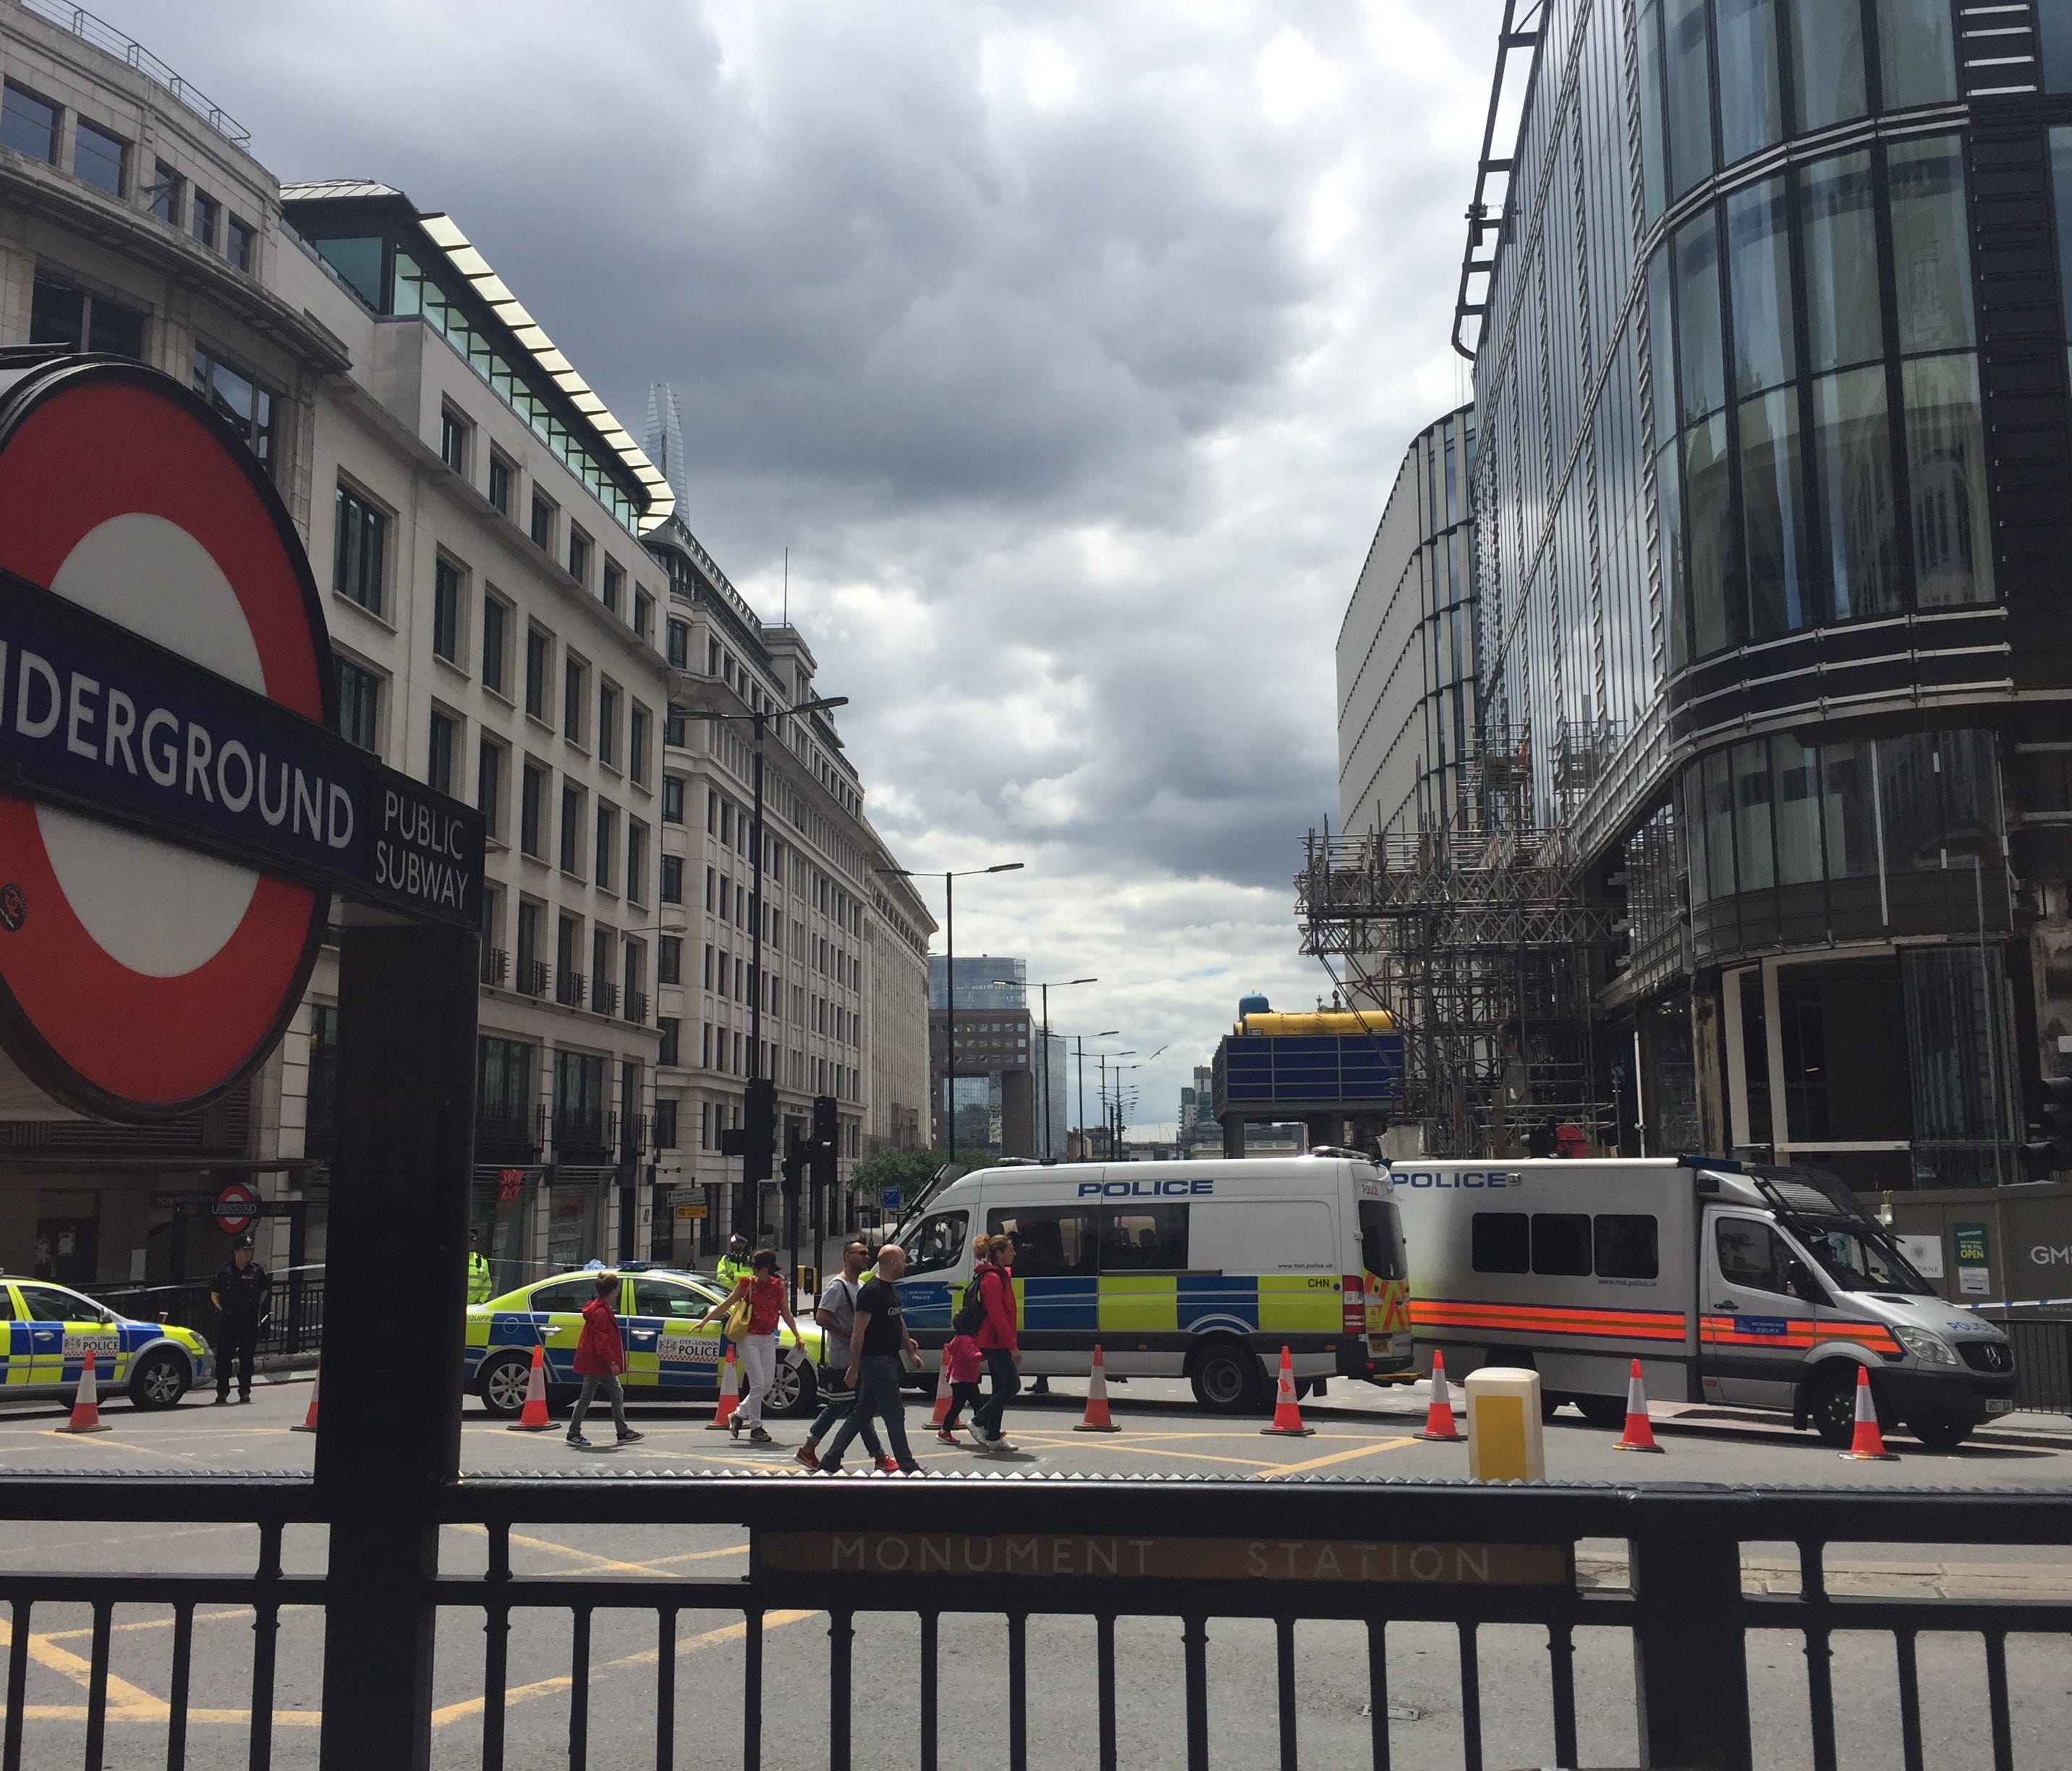 Police vehicles blocking access to London Bridge.